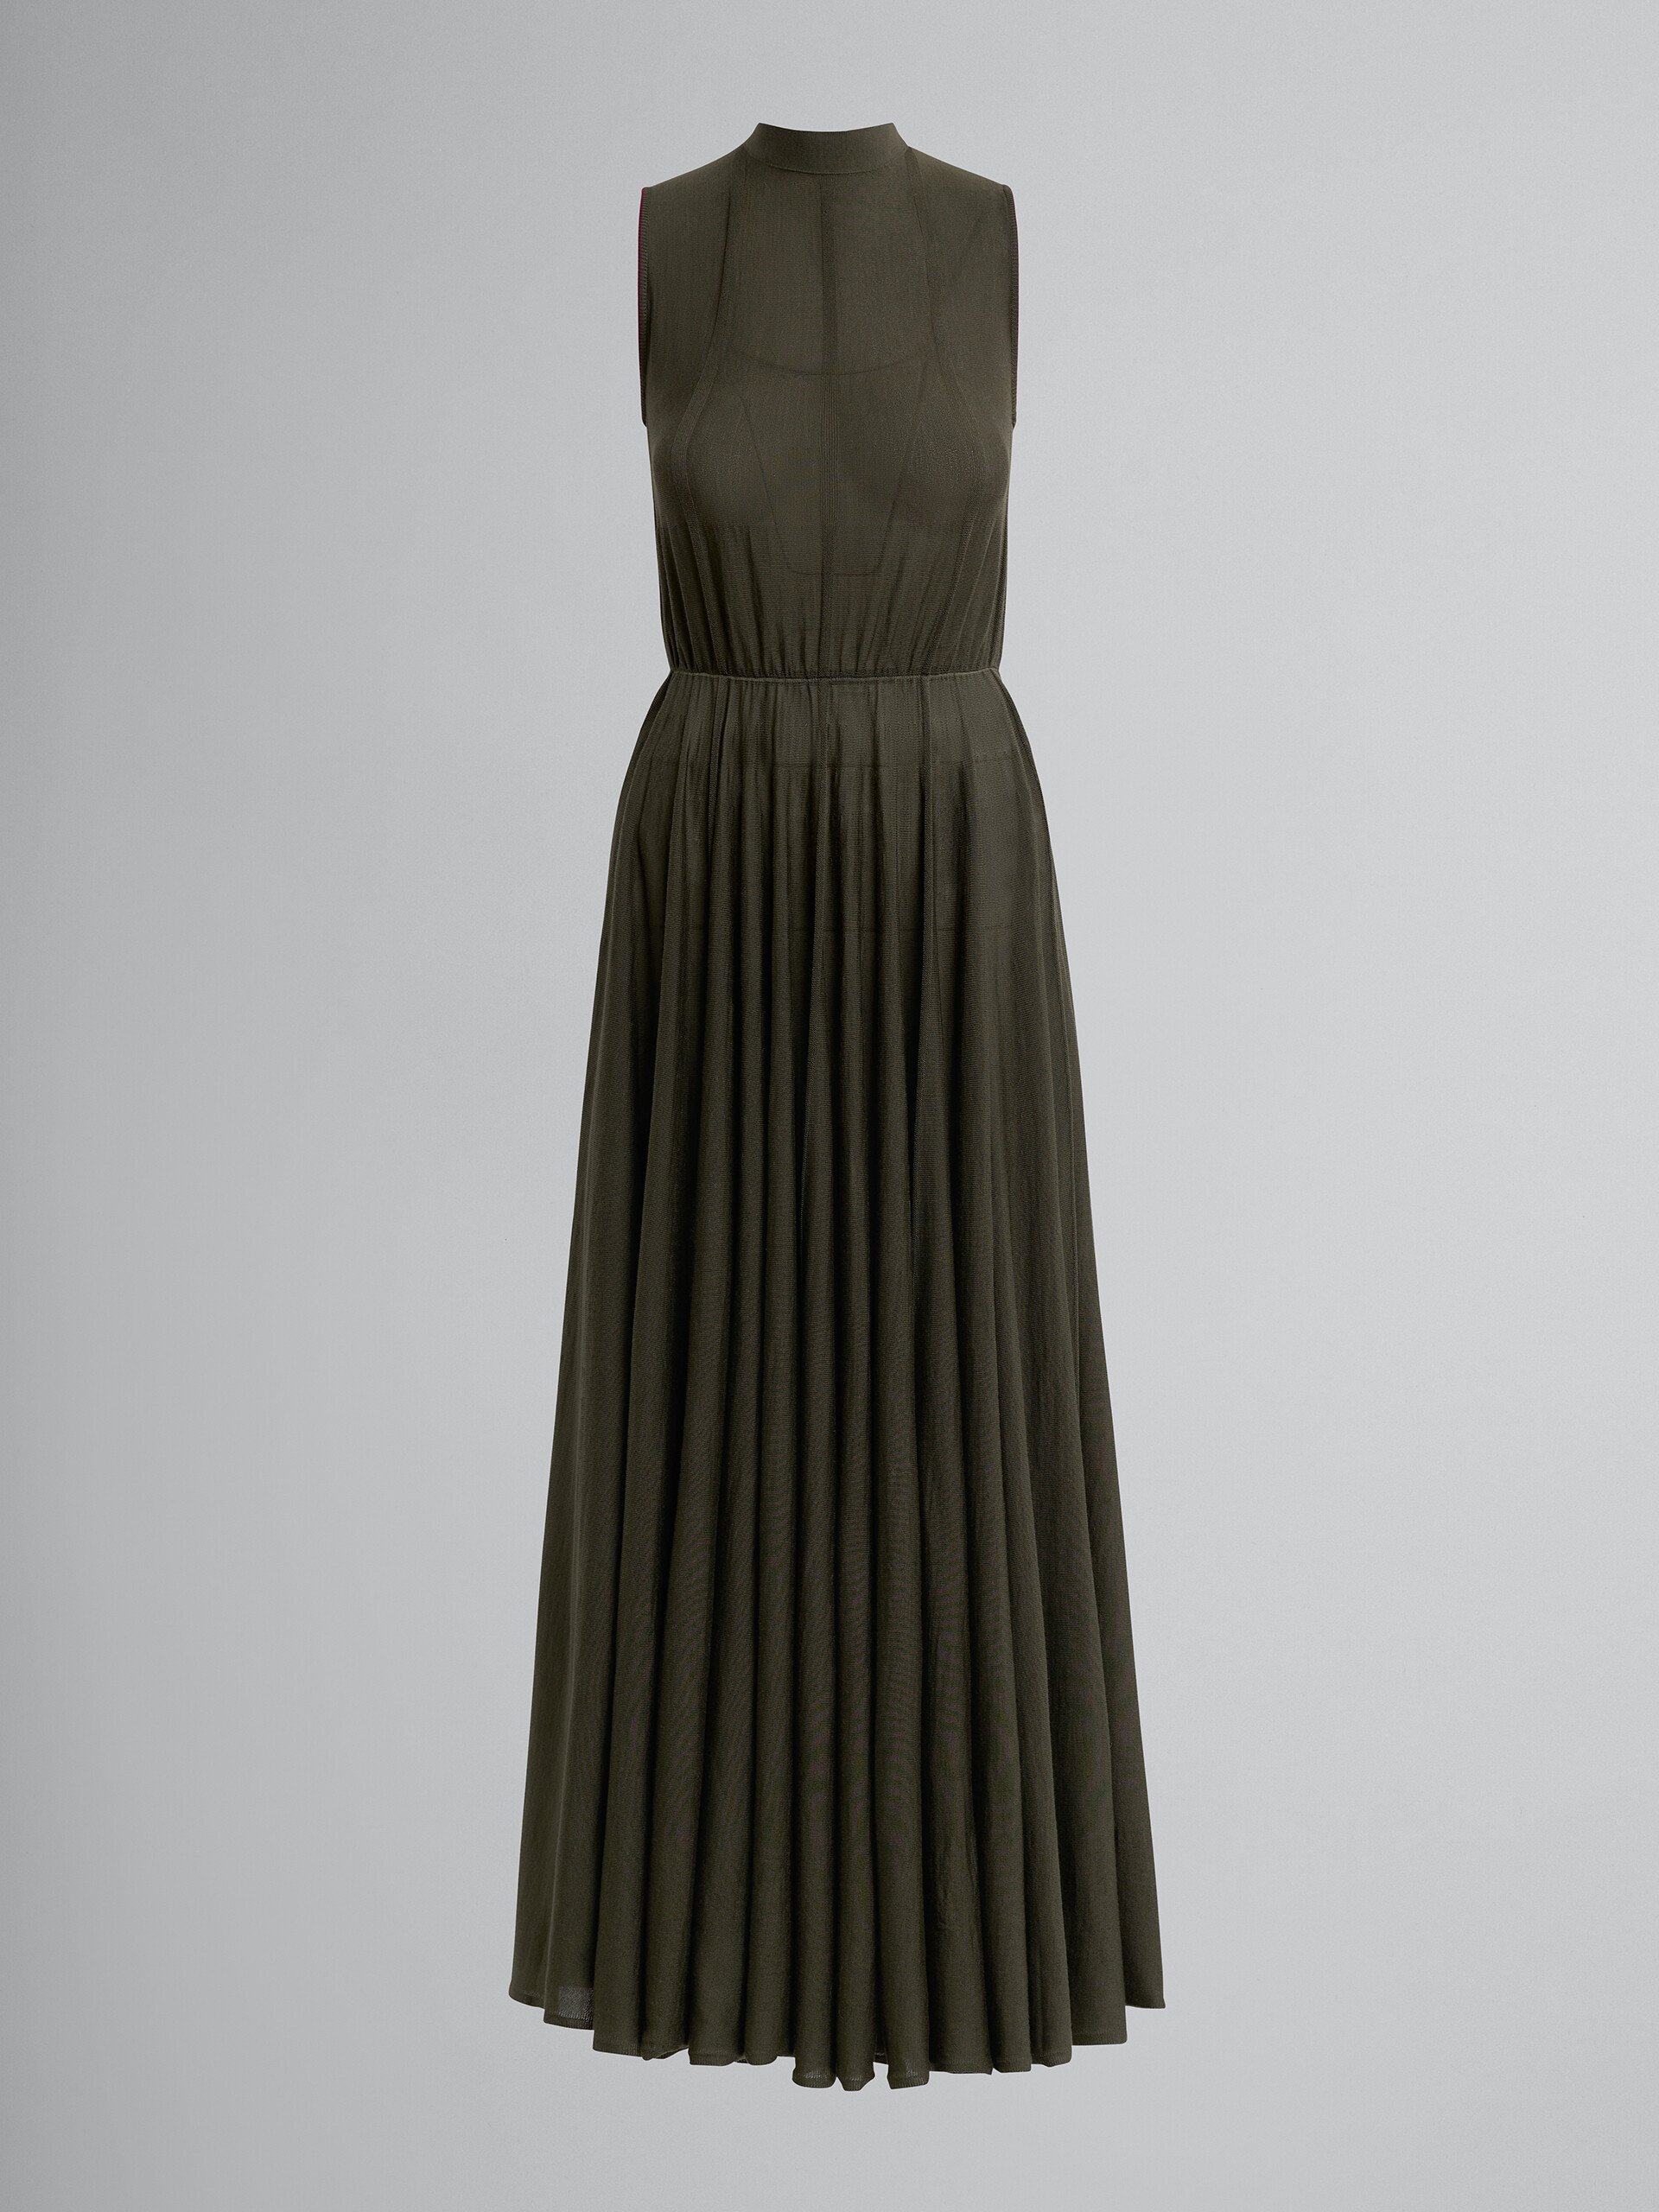 Chic light wool dress - Dresses - Image 1